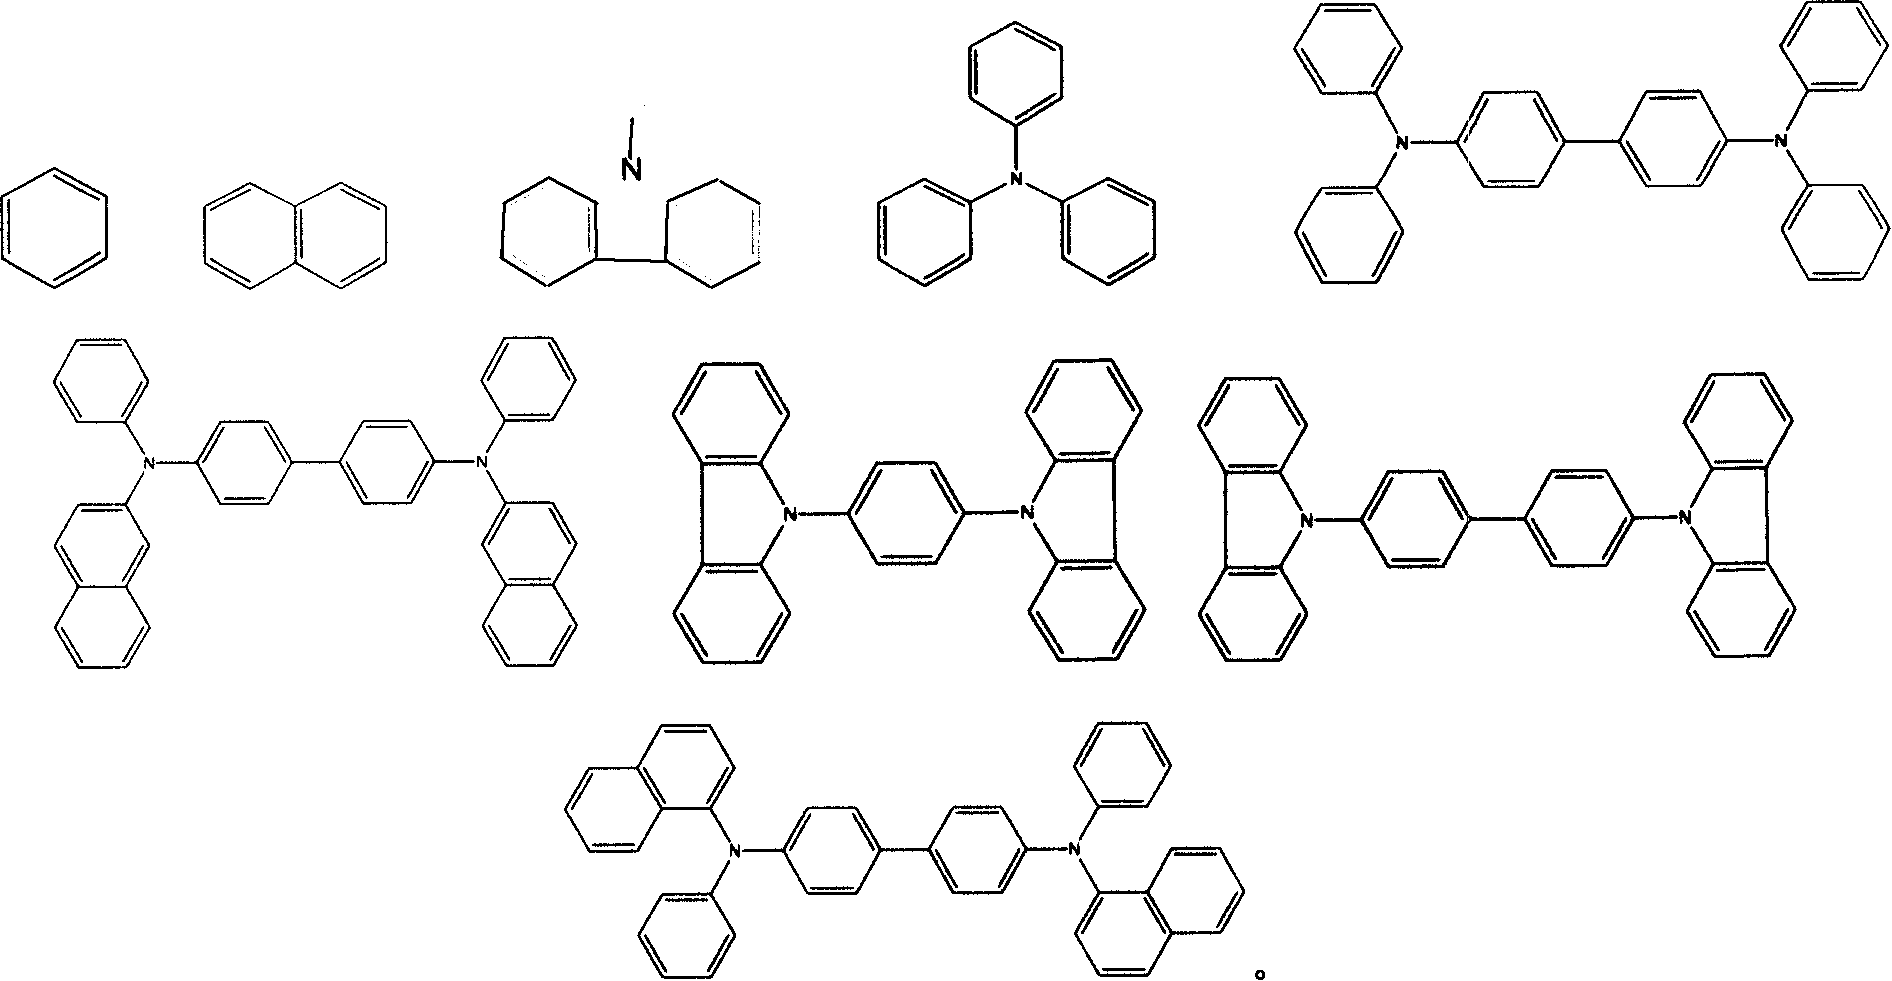 Derivative of 8-hydroxyquinoline of emitting red light